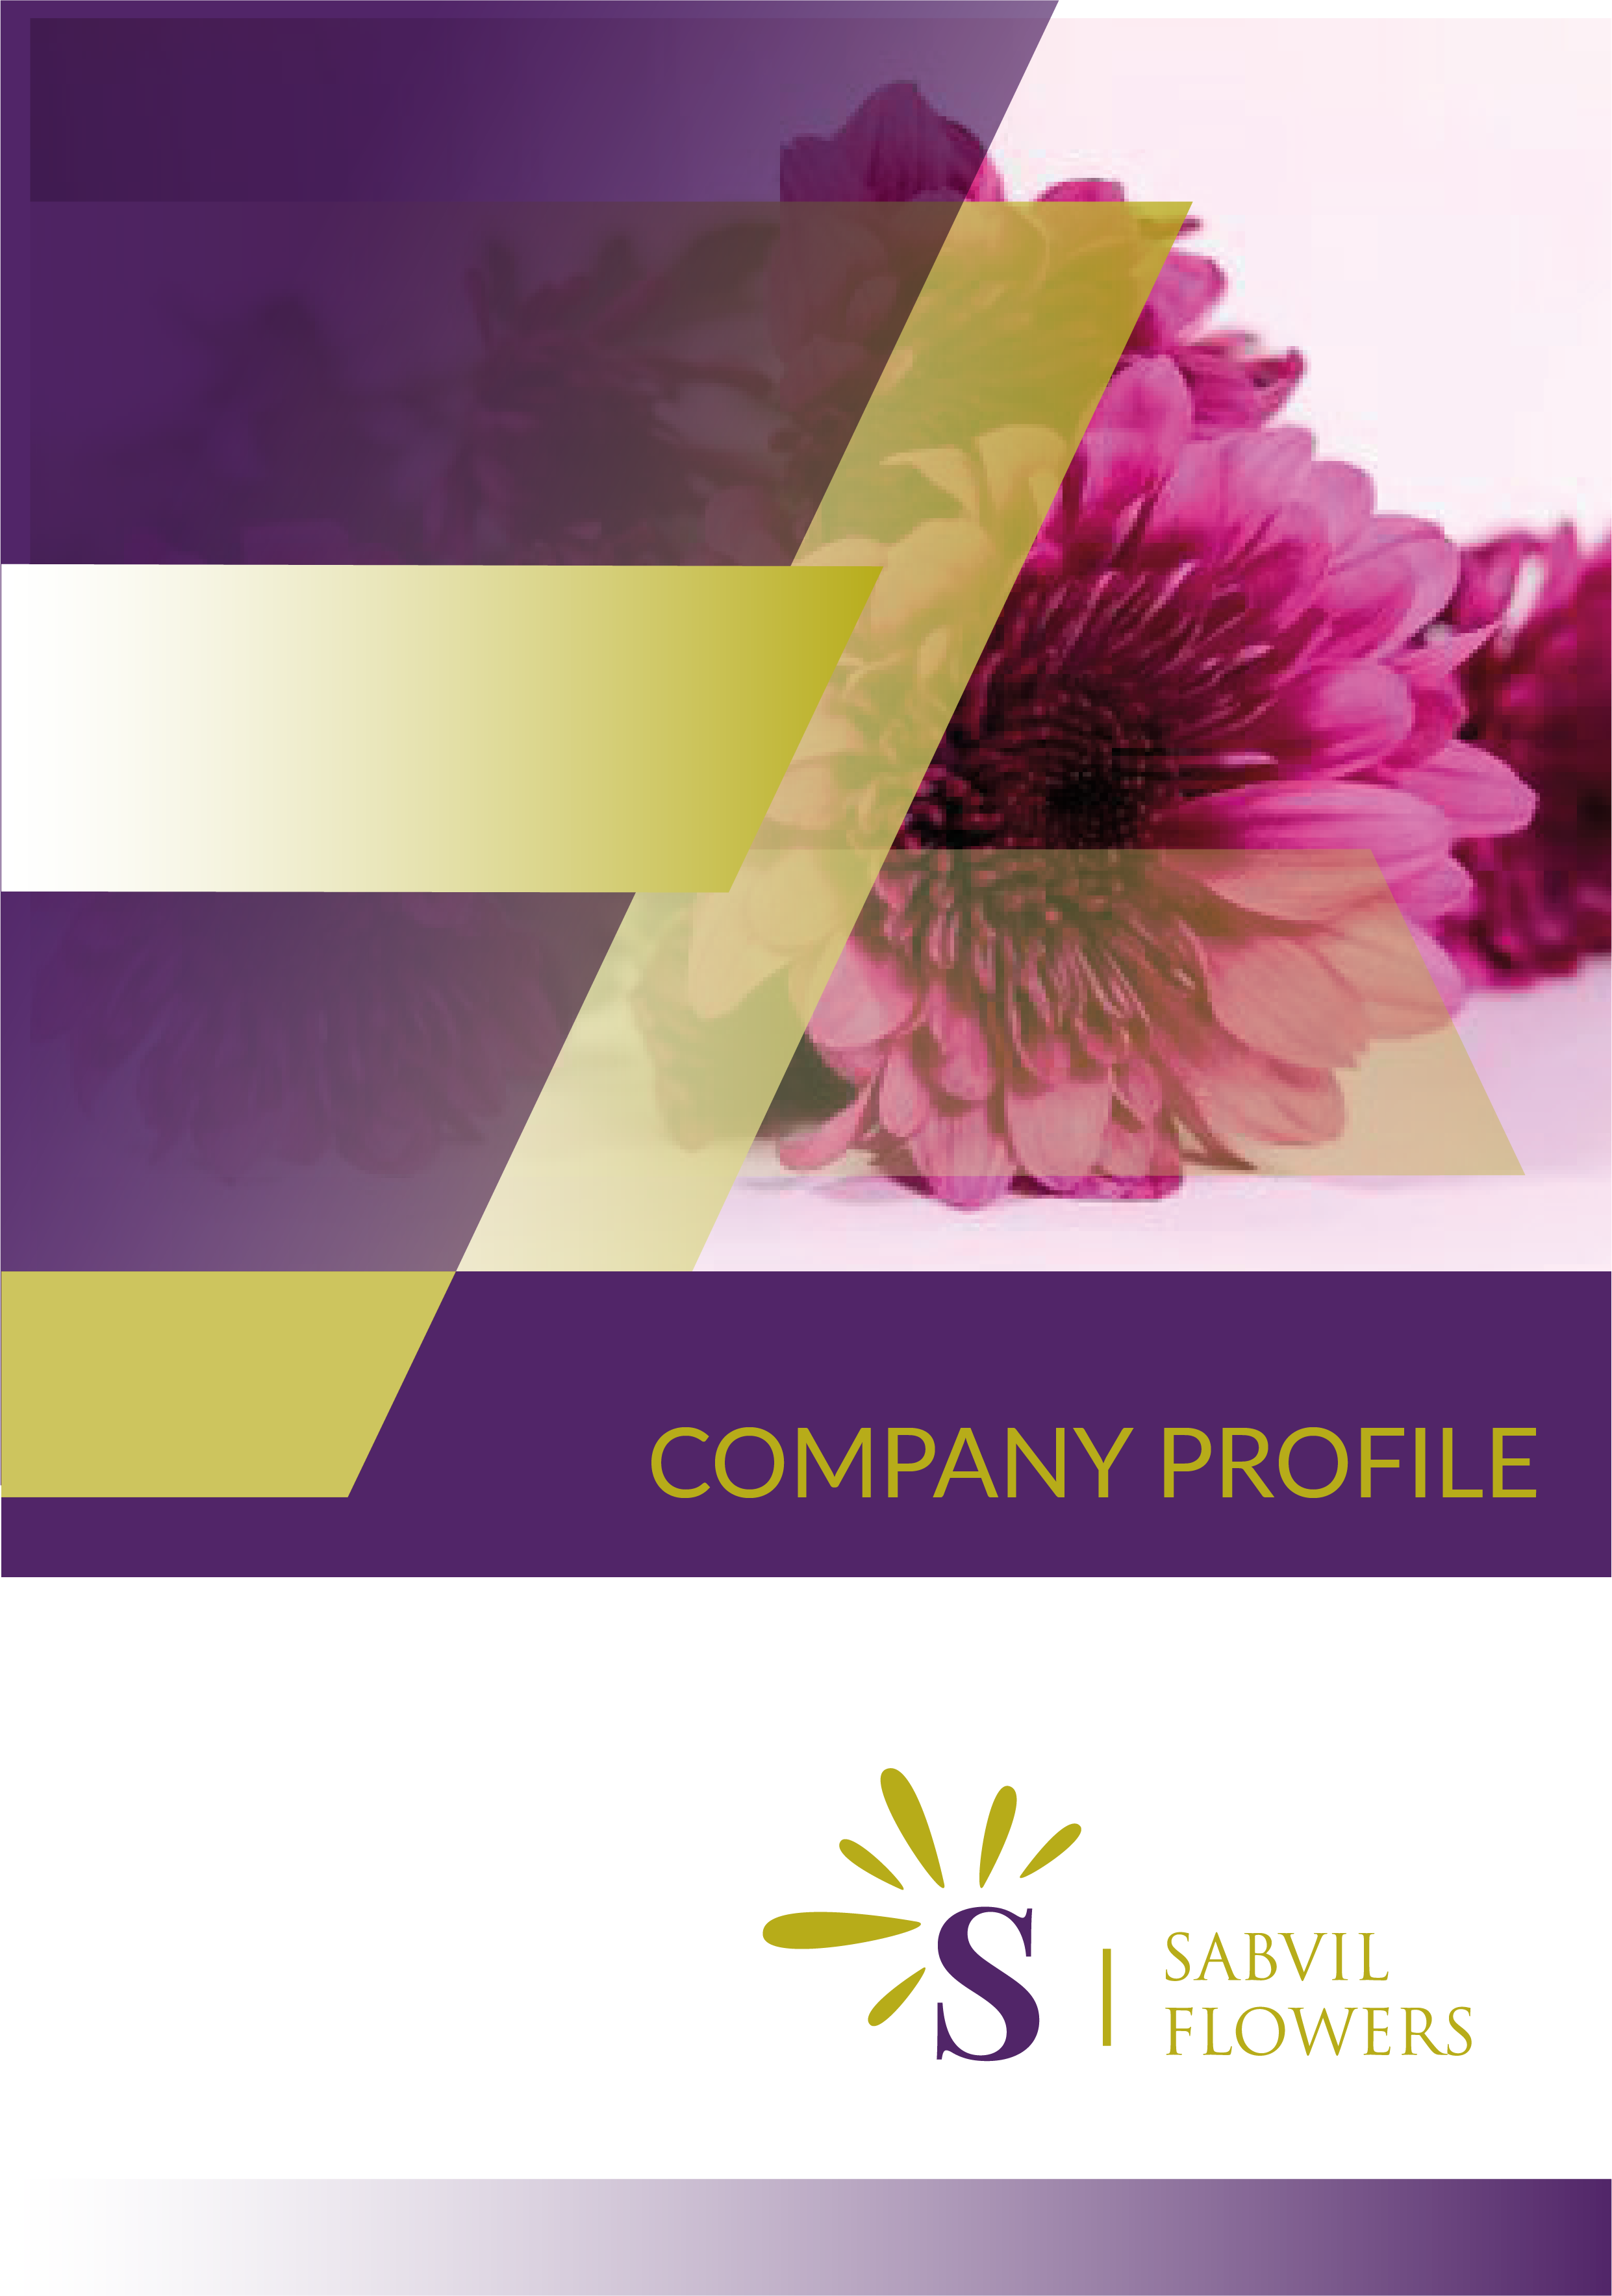 Sabvil Flowers Business Profile